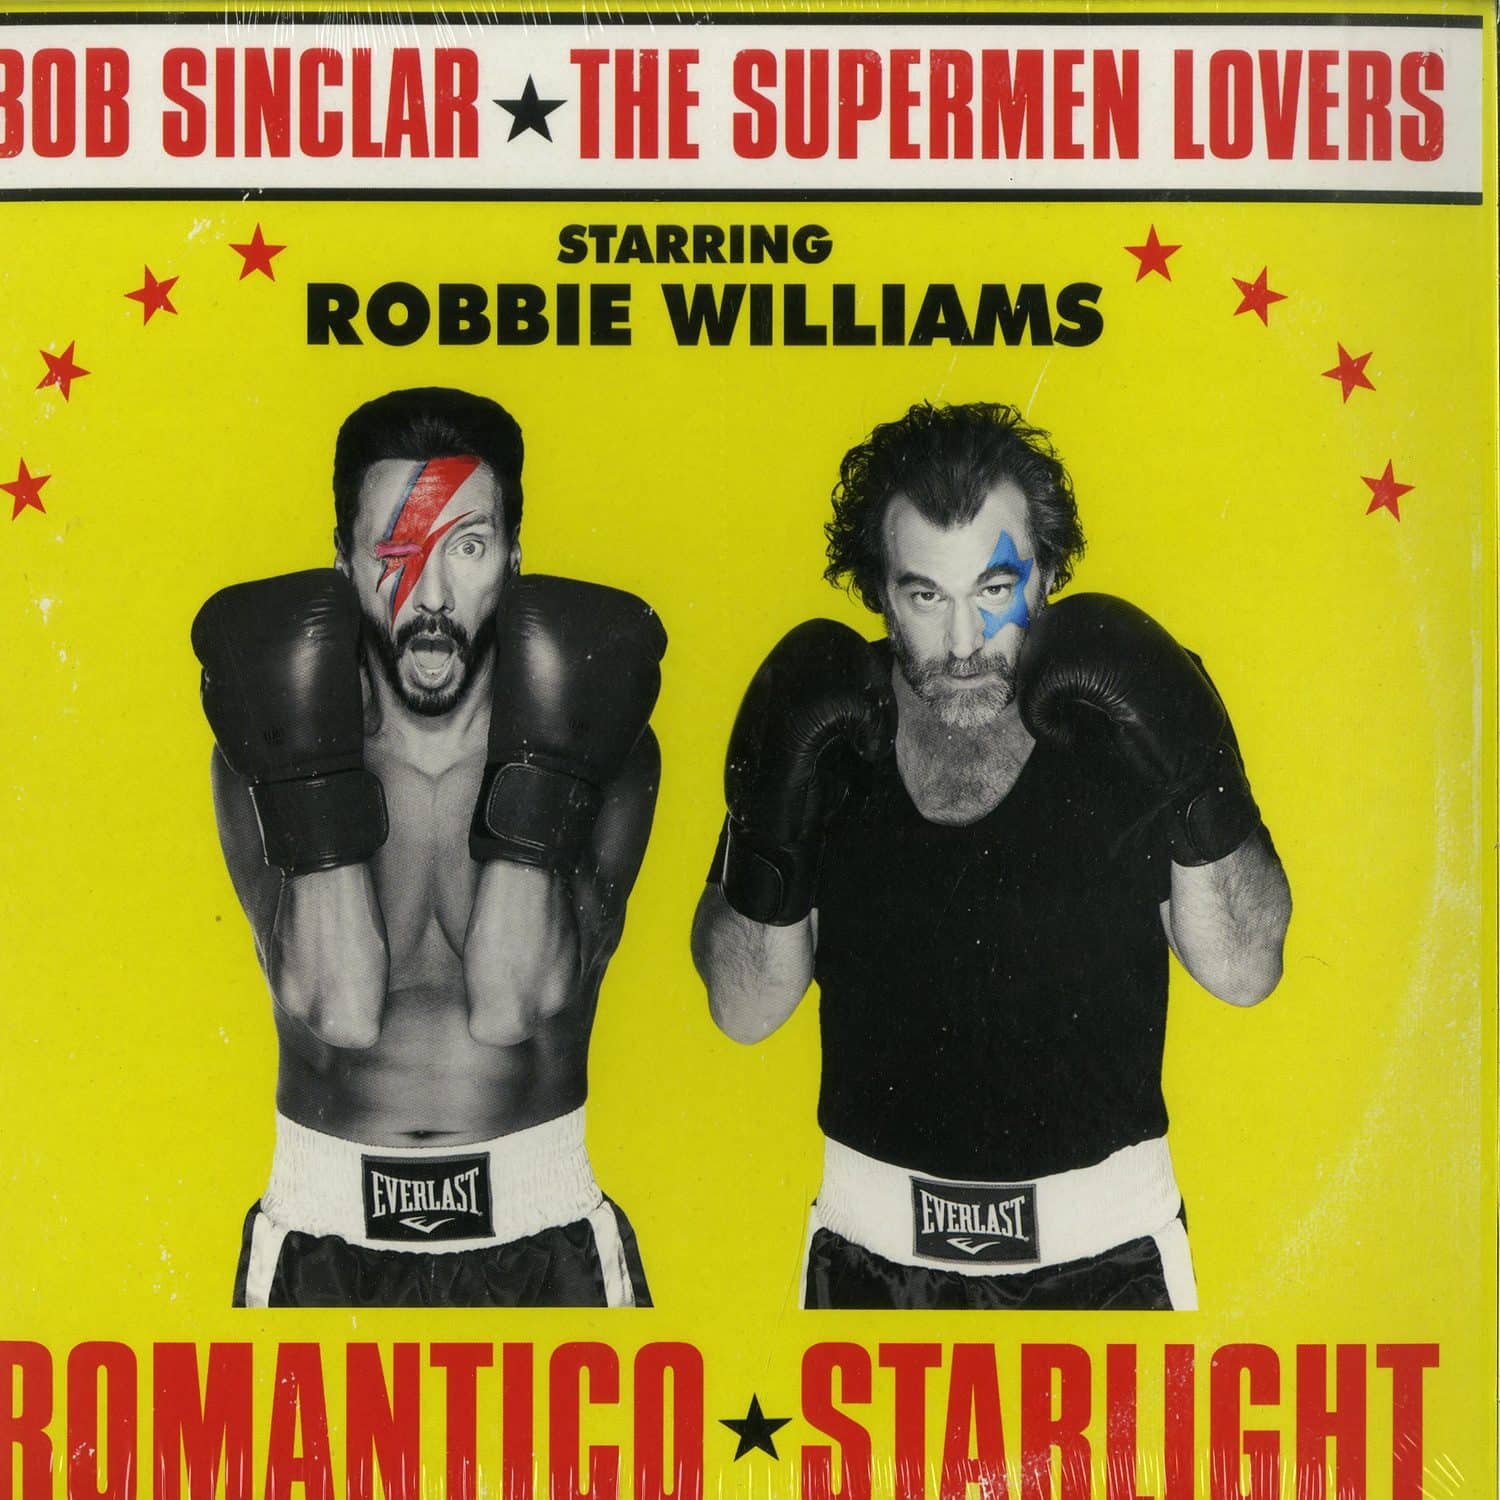 Bob Sinclair x Supermen Lovers x Robbie Williams - ROMANTICO STARLIGHT 